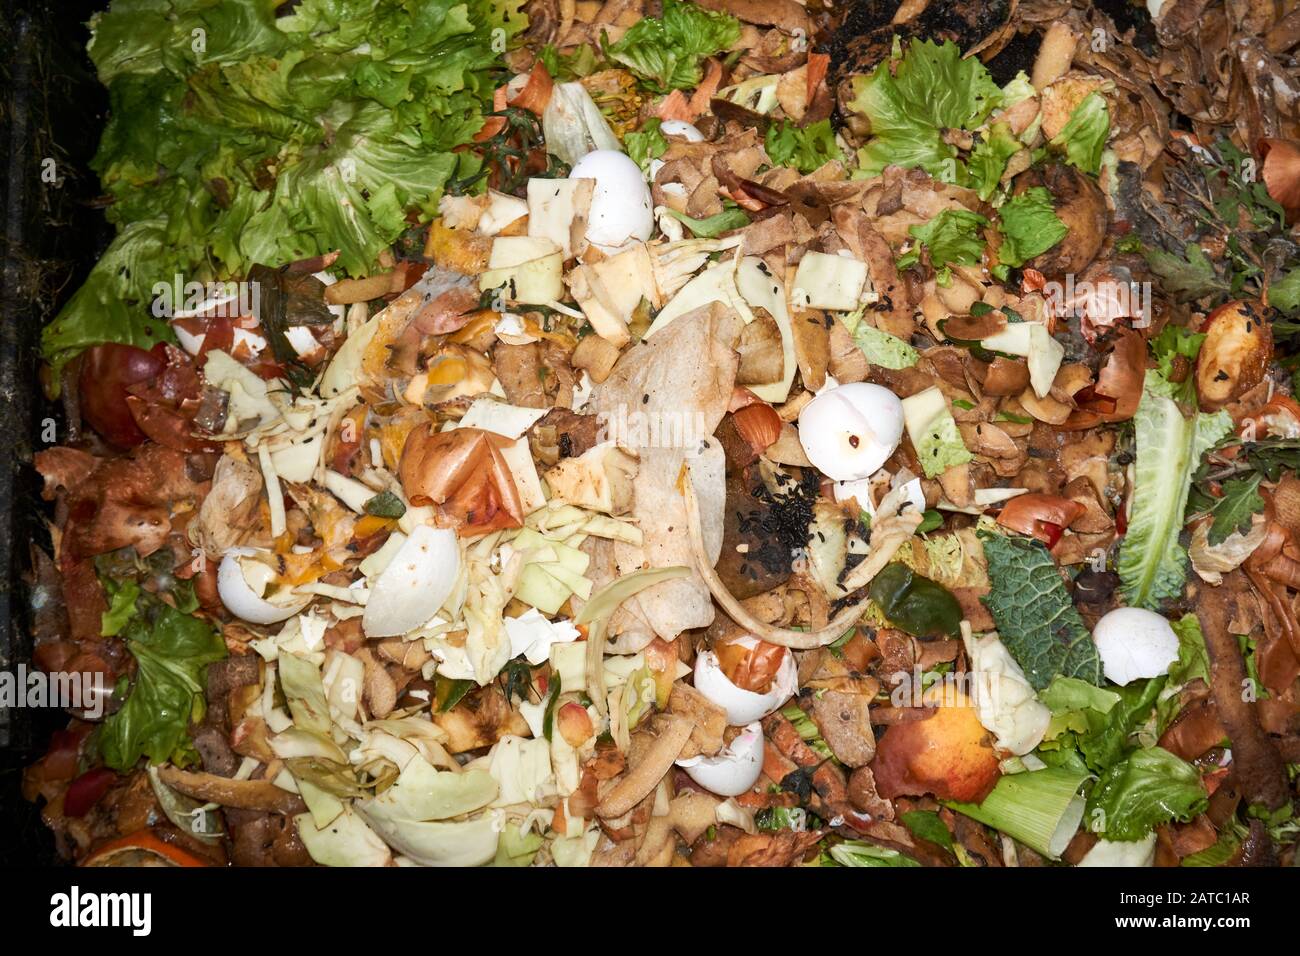 fresh, organic, kitchen waste, household scrap in the compost bin Stock Photo